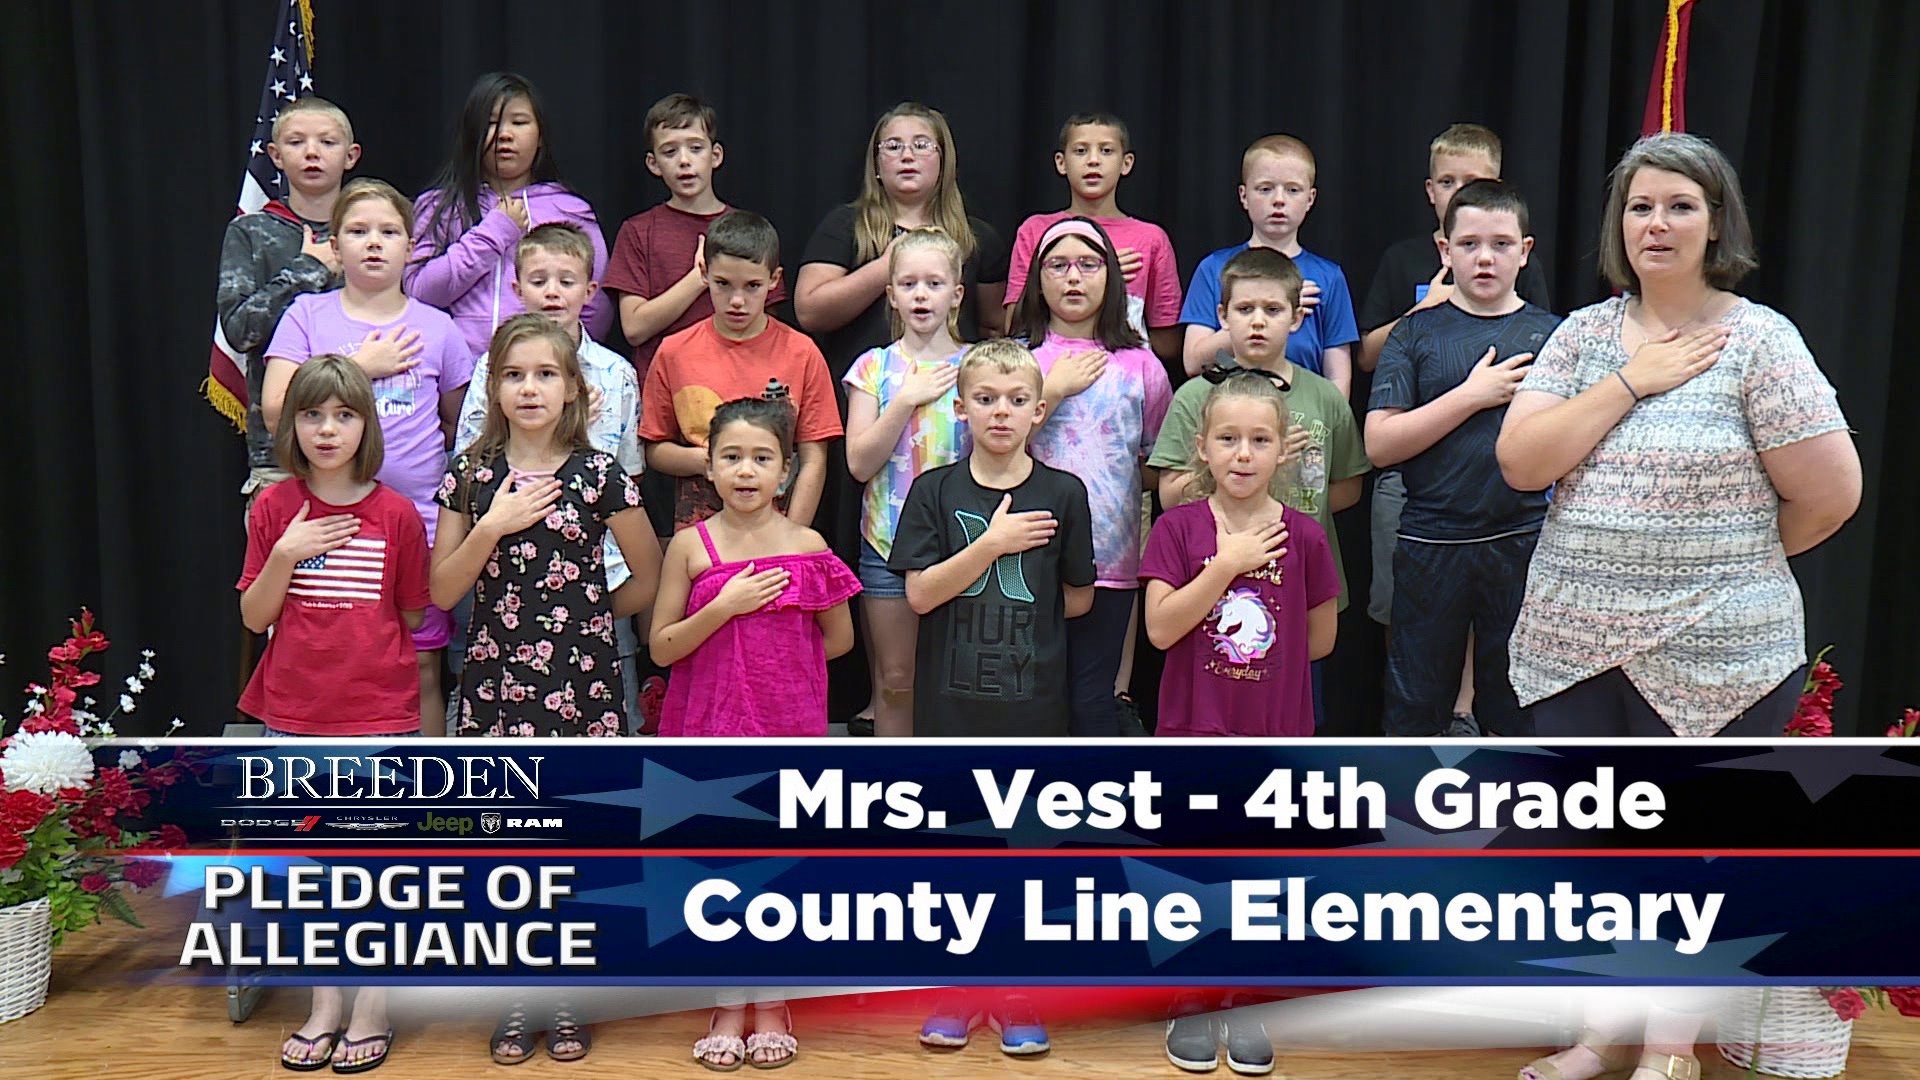 Mrs. Vest  4th Grade County Line Elementary